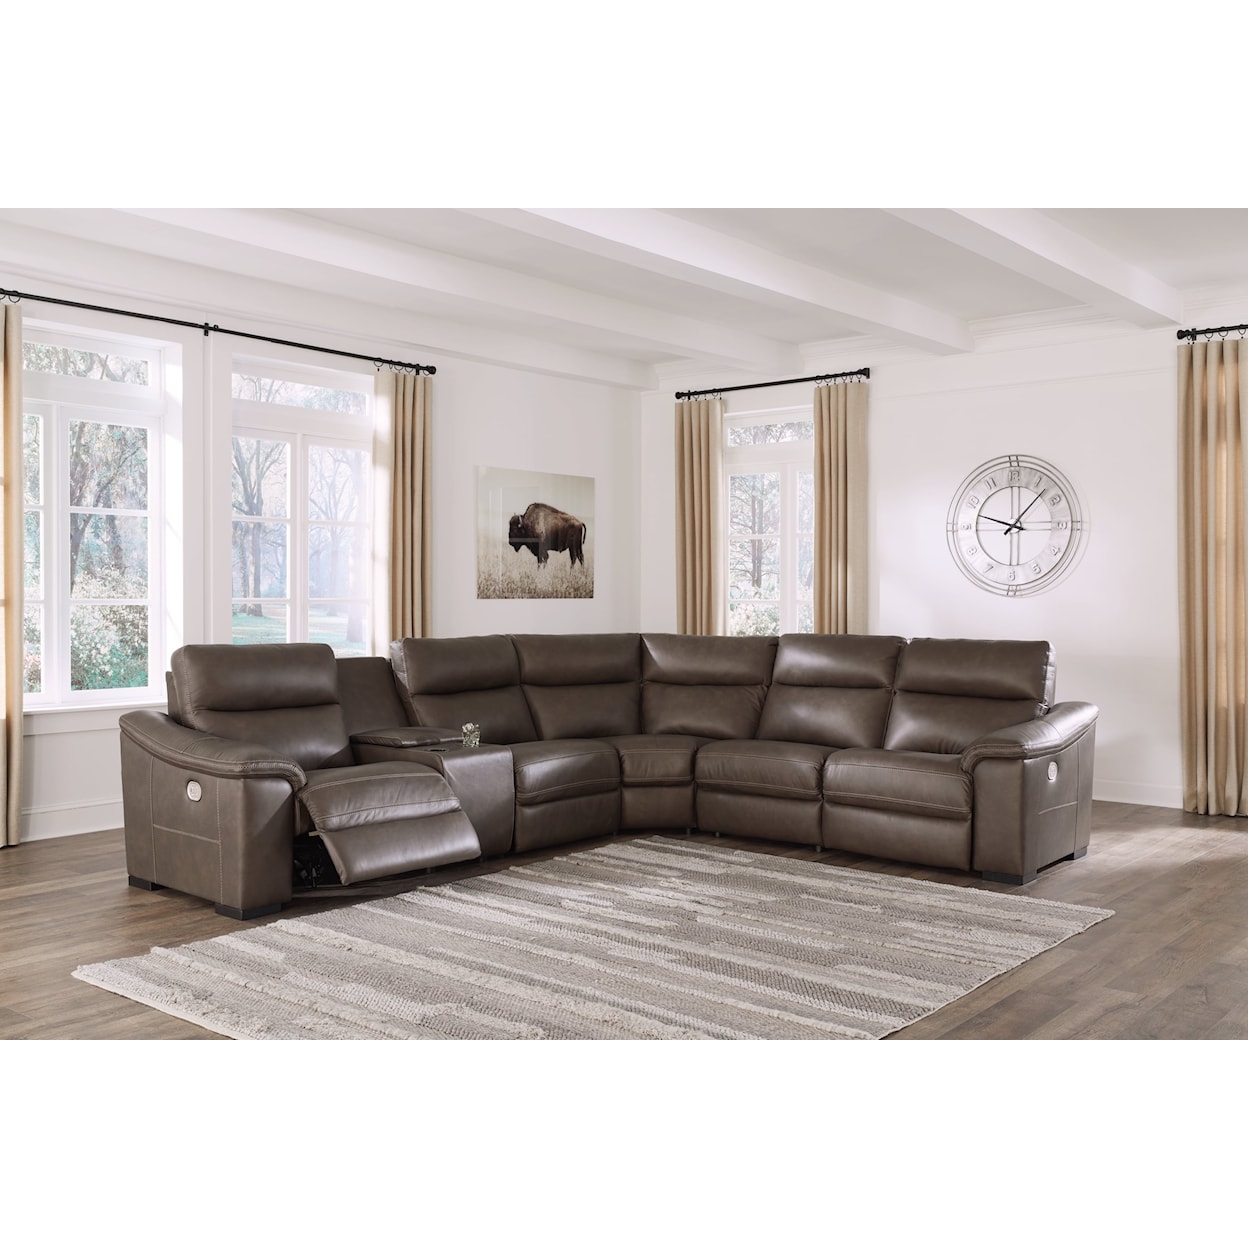 Ashley Furniture Signature Design Salvatore Power Reclining Sectional Sofa